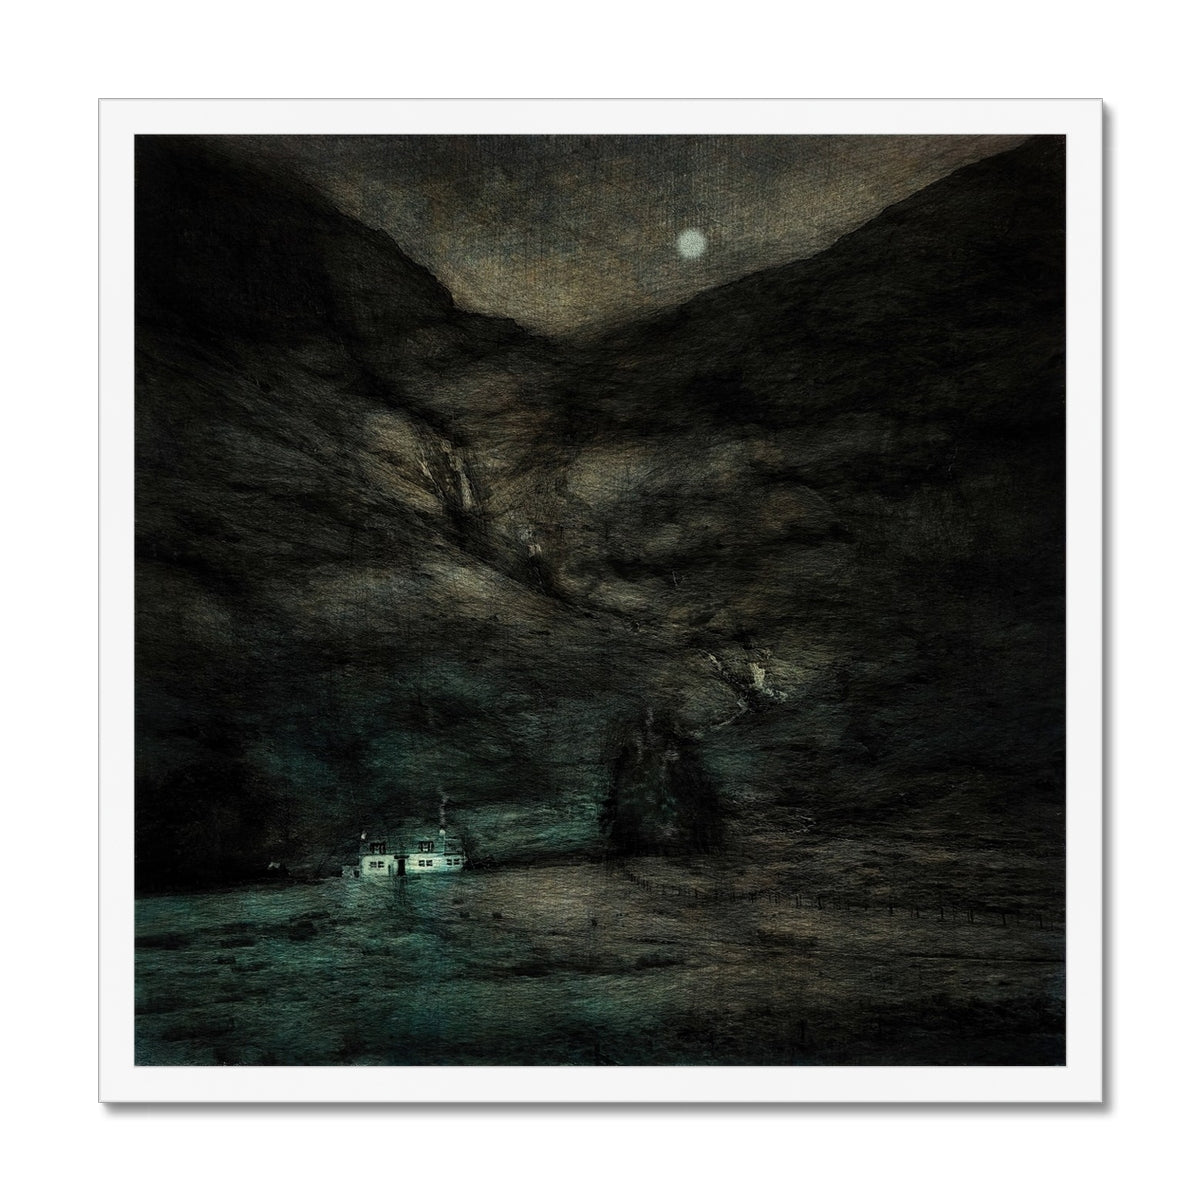 Glencoe Cottage Moonlight Painting | Framed Prints From Scotland-Framed Prints-Glencoe Art Gallery-20"x20"-White Frame-Paintings, Prints, Homeware, Art Gifts From Scotland By Scottish Artist Kevin Hunter